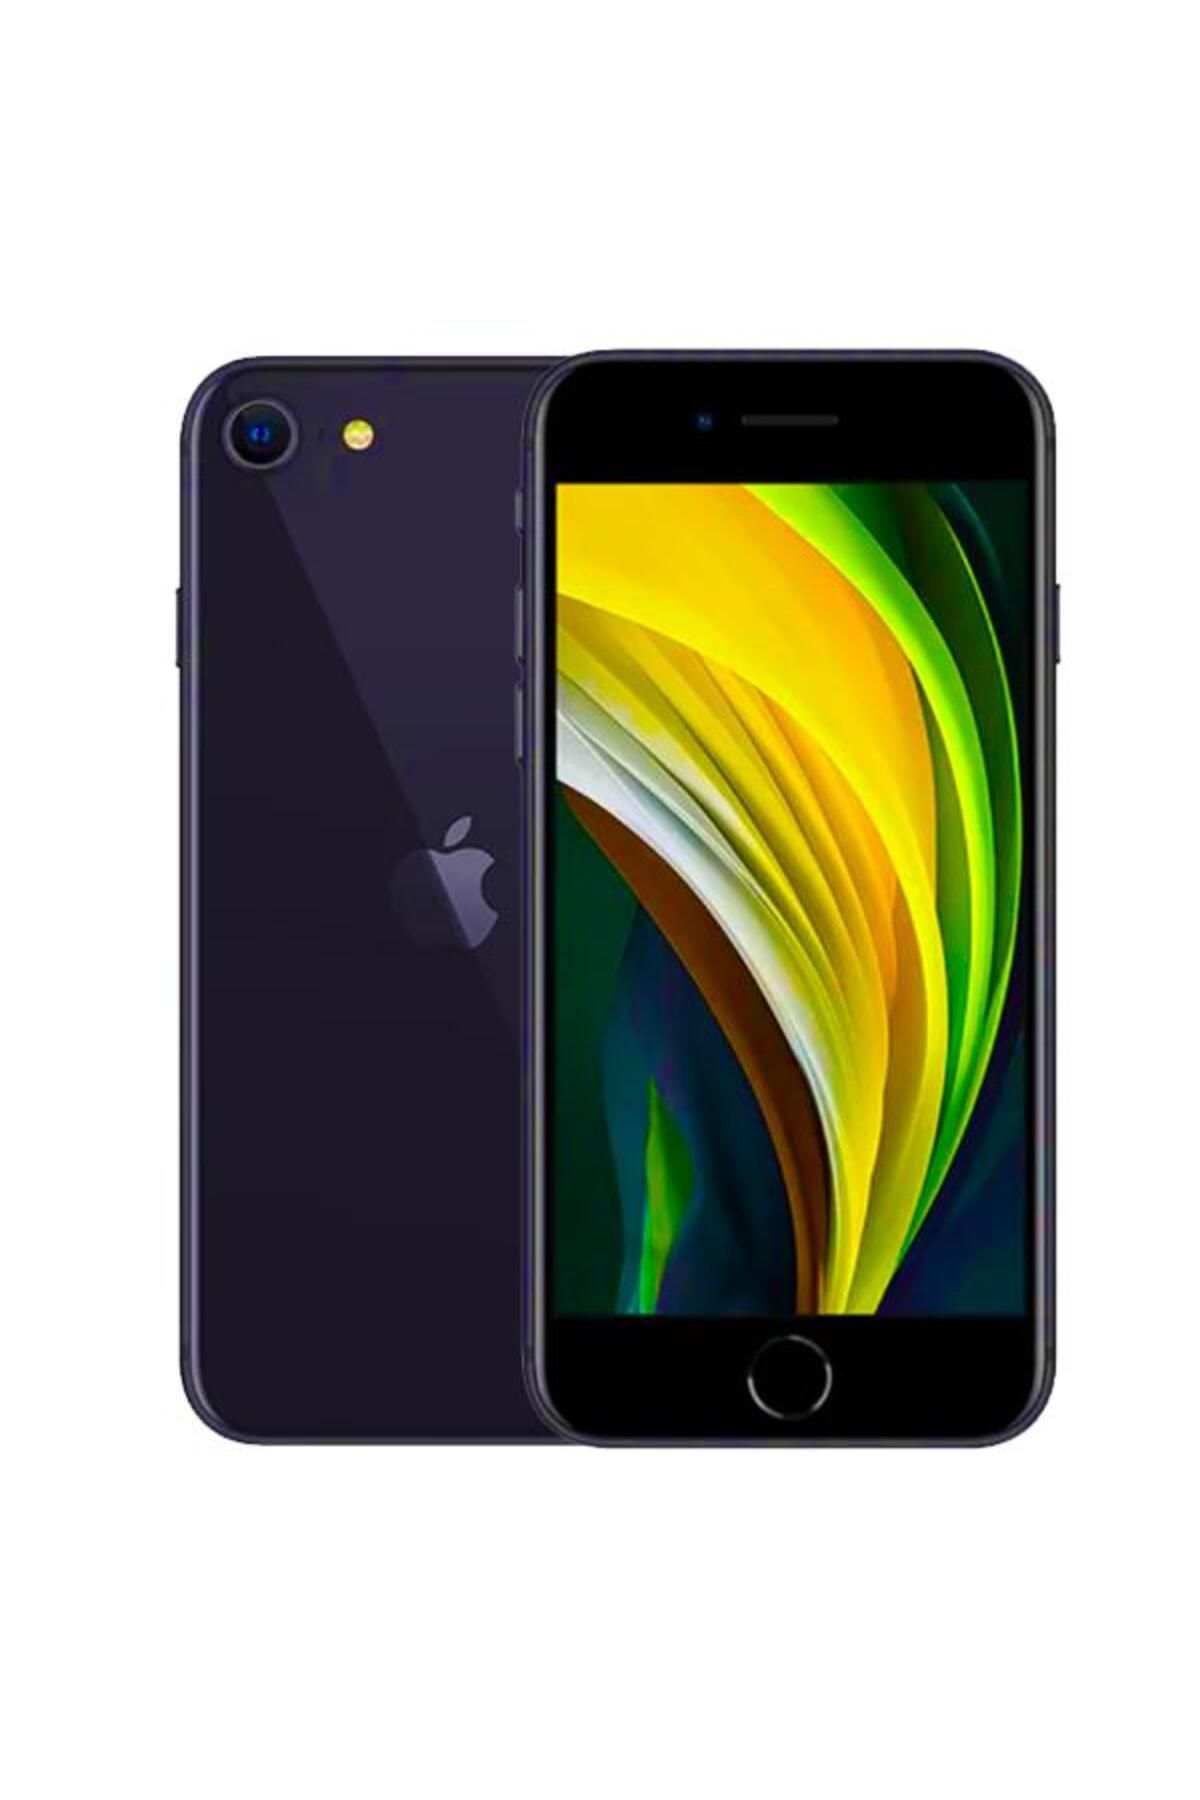 Apple Yenilenmiş iPhone SE 2020 Black 128GB B Kalite (12 Ay Garantili)